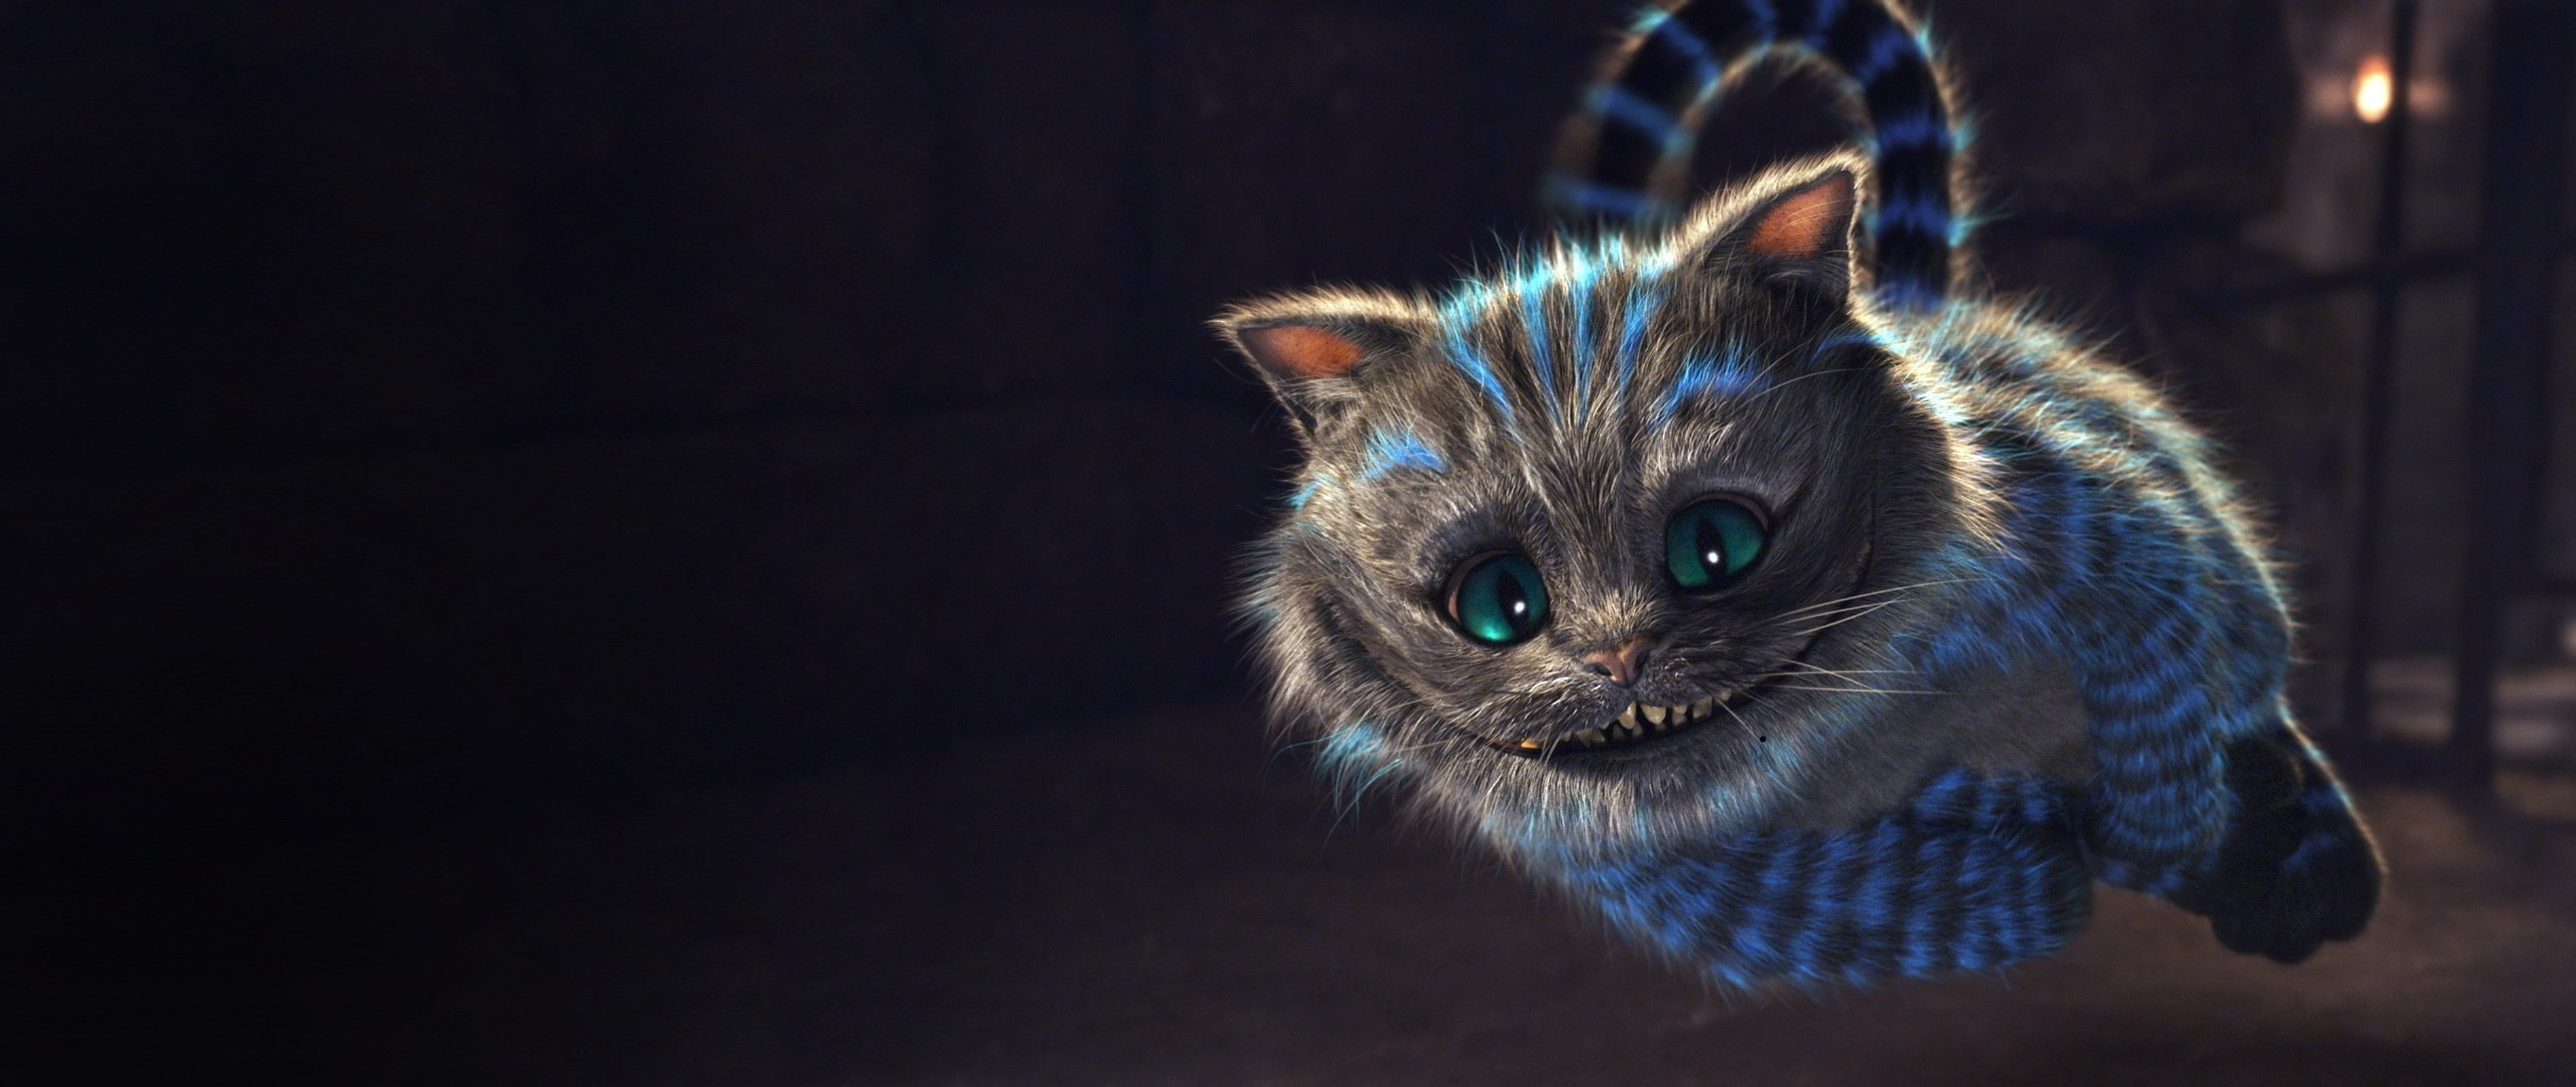 Alice In Wonderland, cat, Cheshire Cat, Furry, kitty, smiling